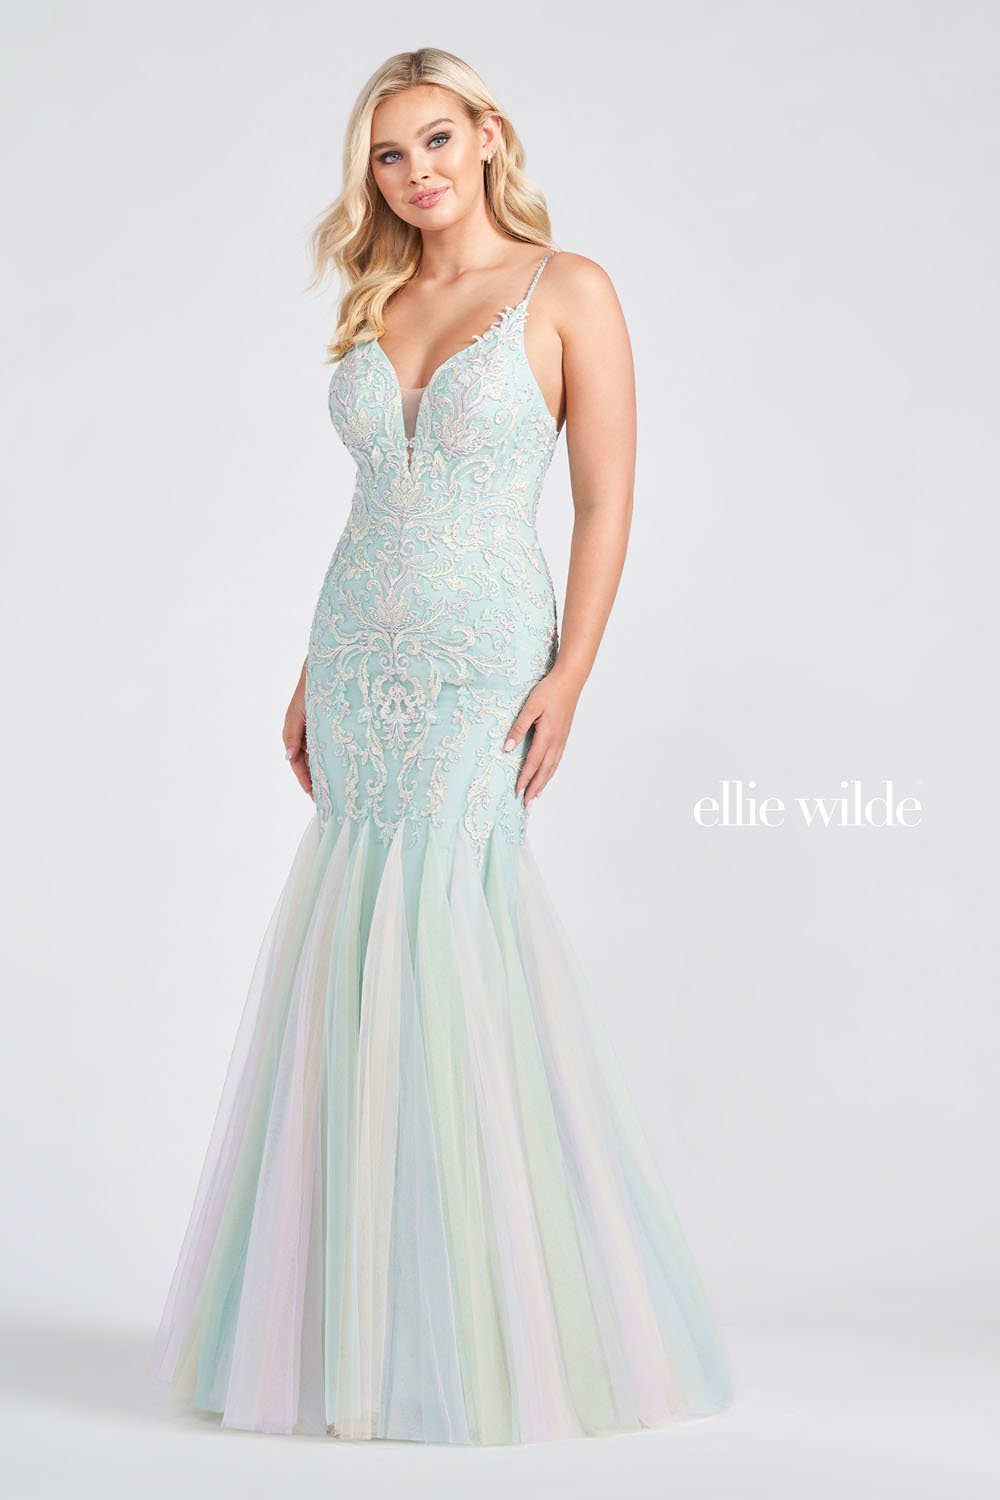 Ellie Wilde Sea Breeze Multi EW122042 Prom Dress Image.  Sea Breeze Multi formal dress.